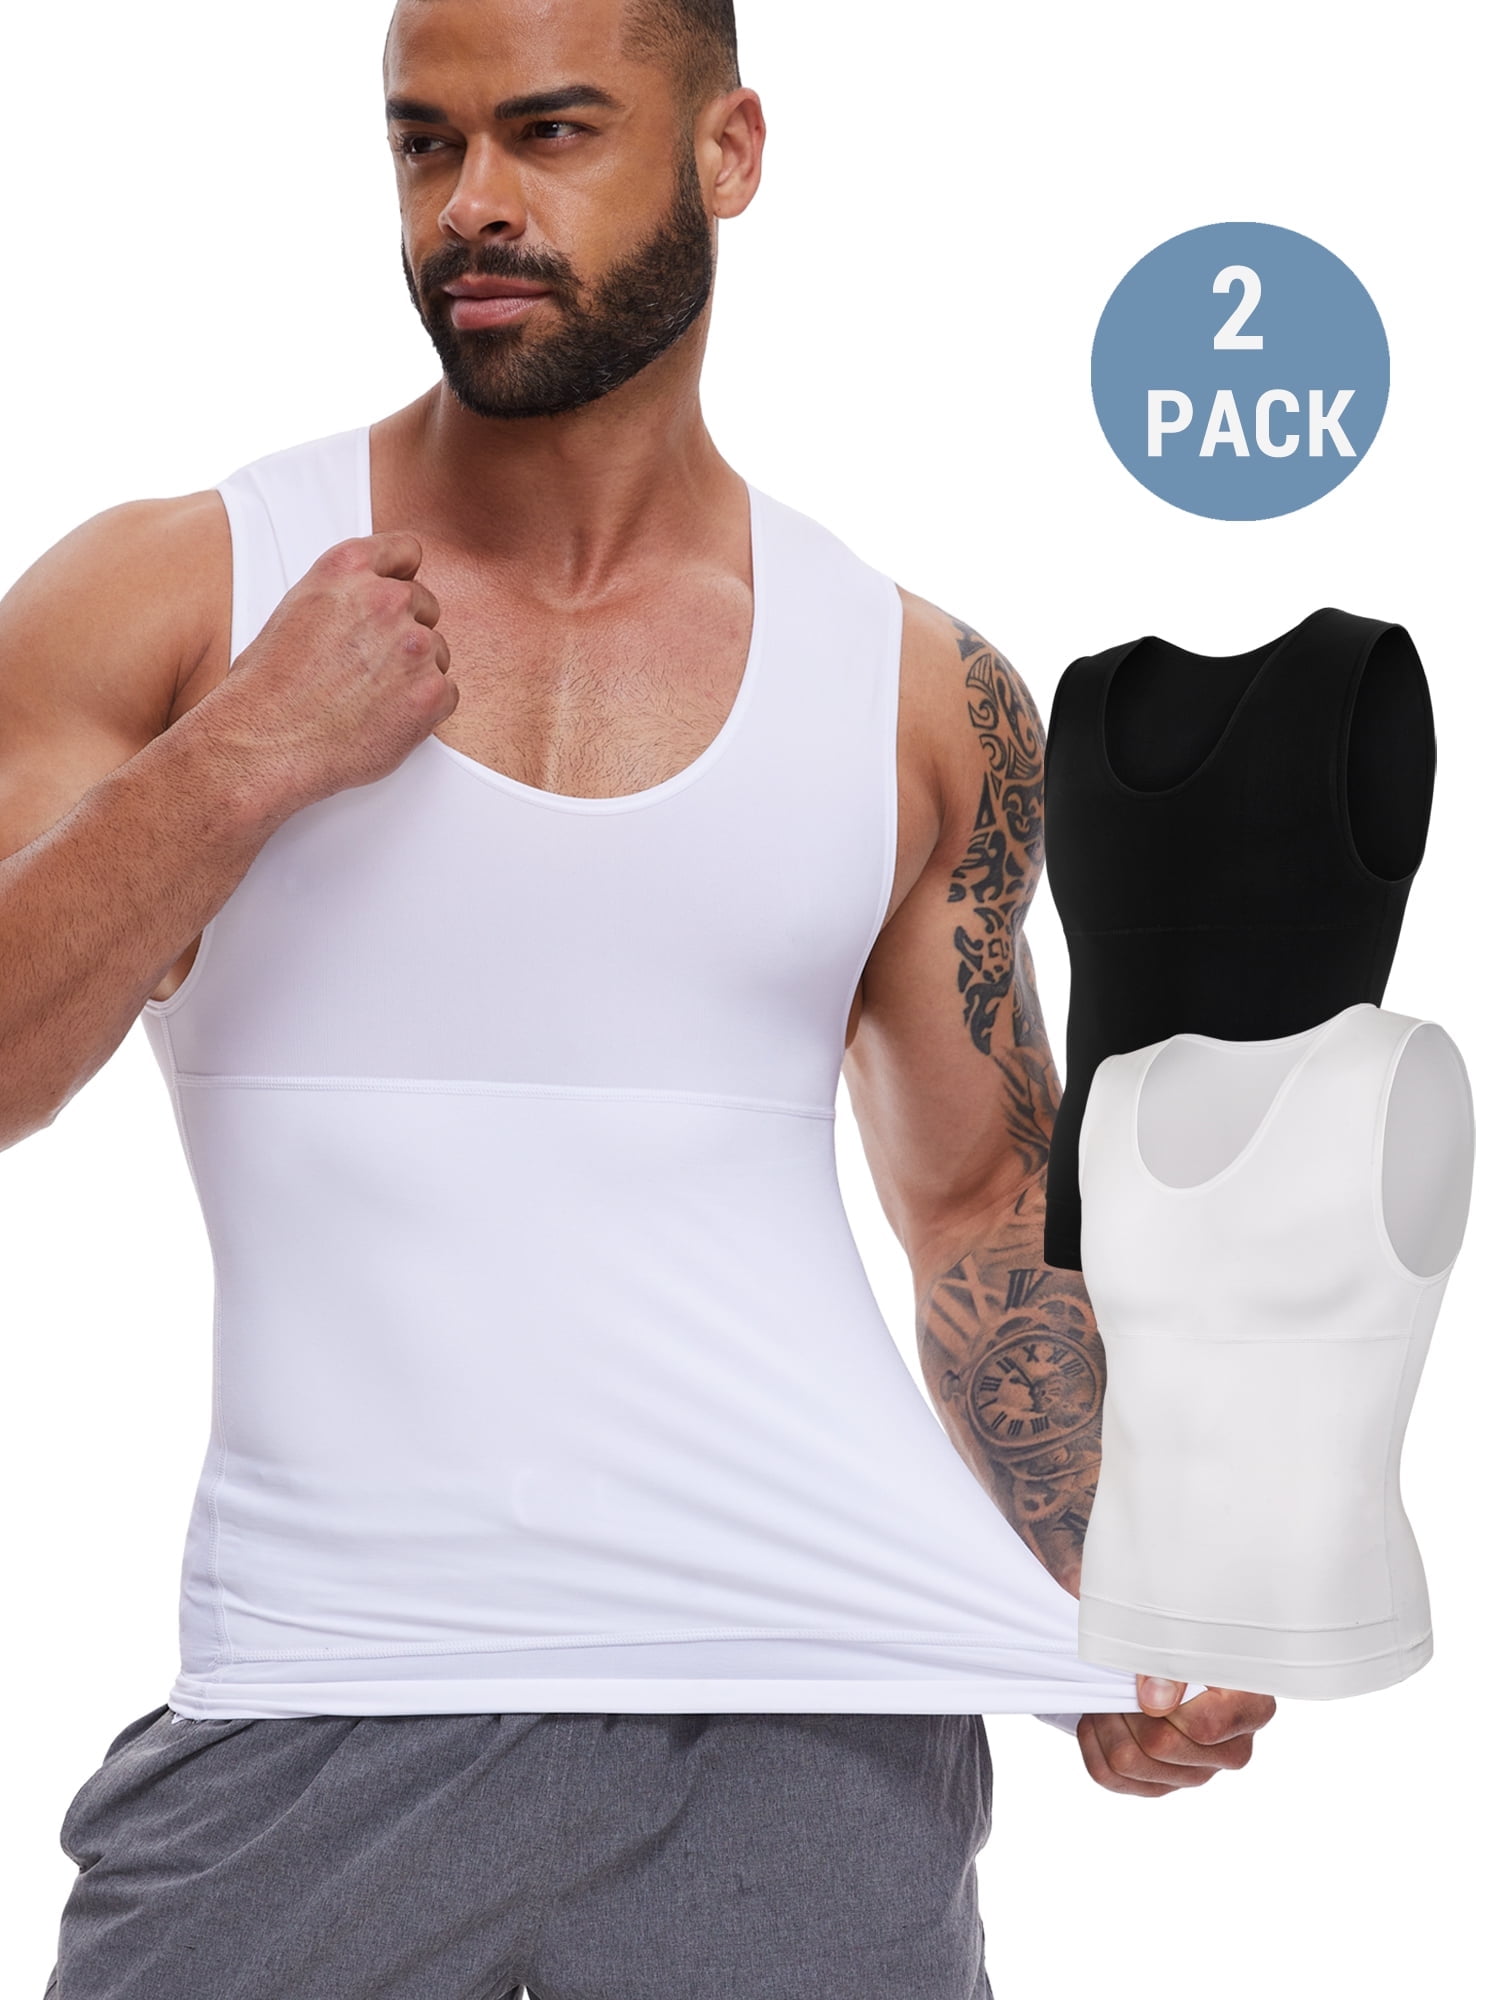 Men's Slimming Body Shaper Breathable Compression Shirt Girdles Abdomen  Slim Vest Tummy Shapewear